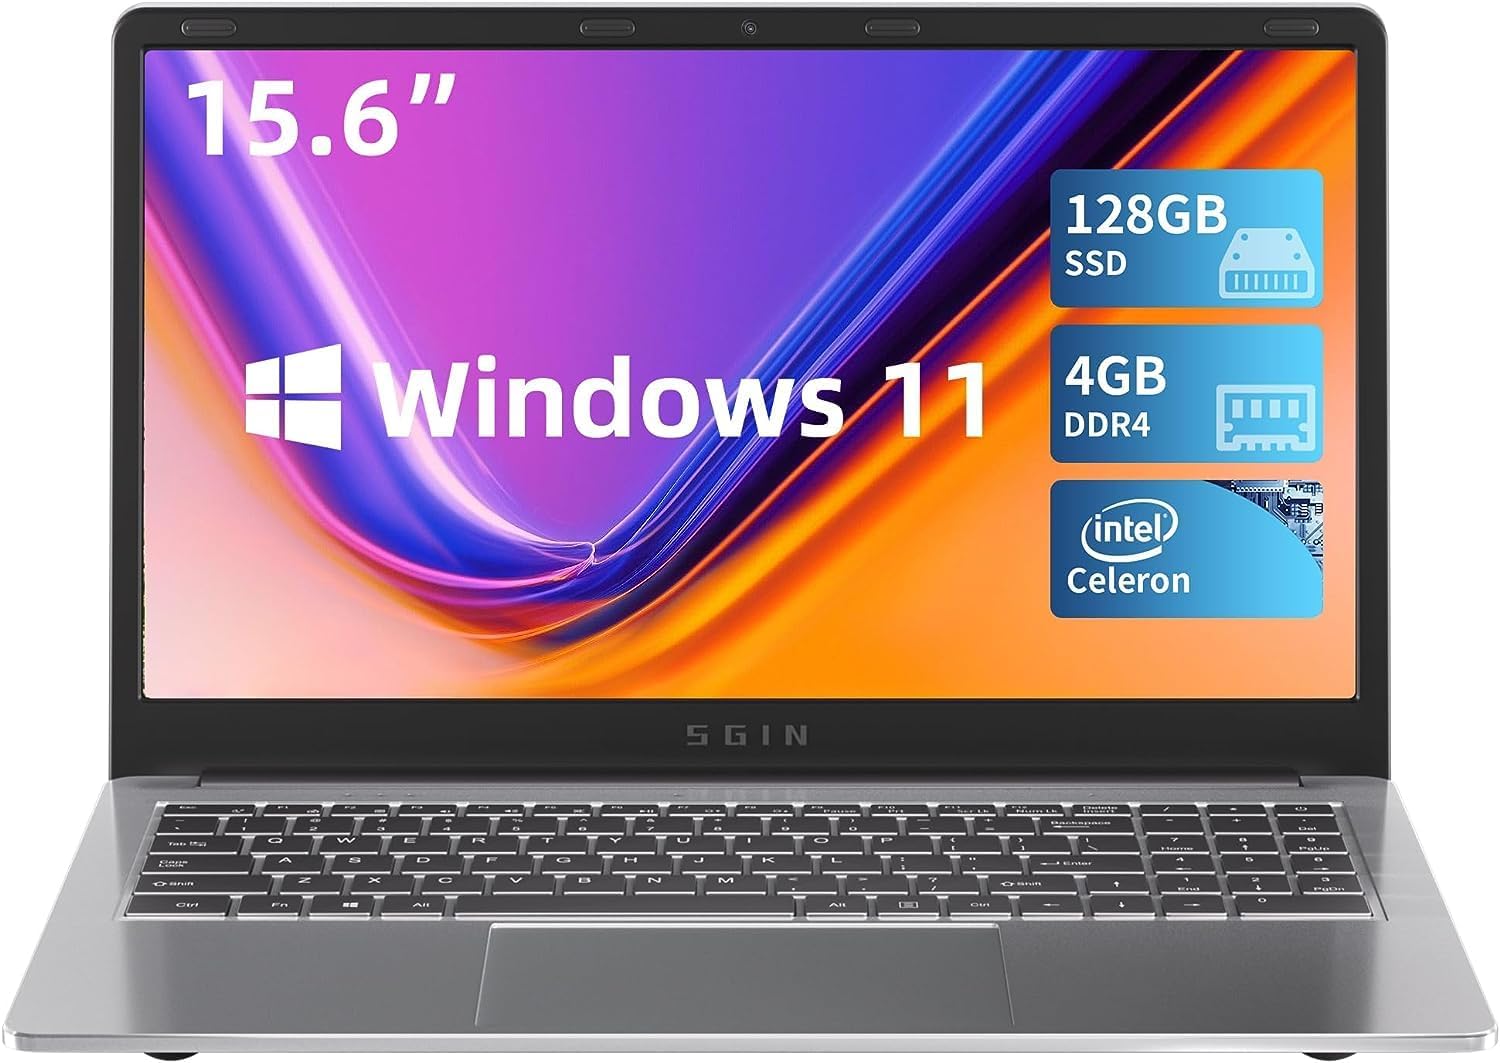 SGIN Laptop 4GB DDR4 128GB SSD, 15.6 Inch Windows 11 Laptops Computer with Intel Celeron Quad Core Processor (up to 2.5 GHz), Intel UHD Graphics 600, Mini HDMI, WiFi, Webcam, USB3.0, Bluetooth 4.2